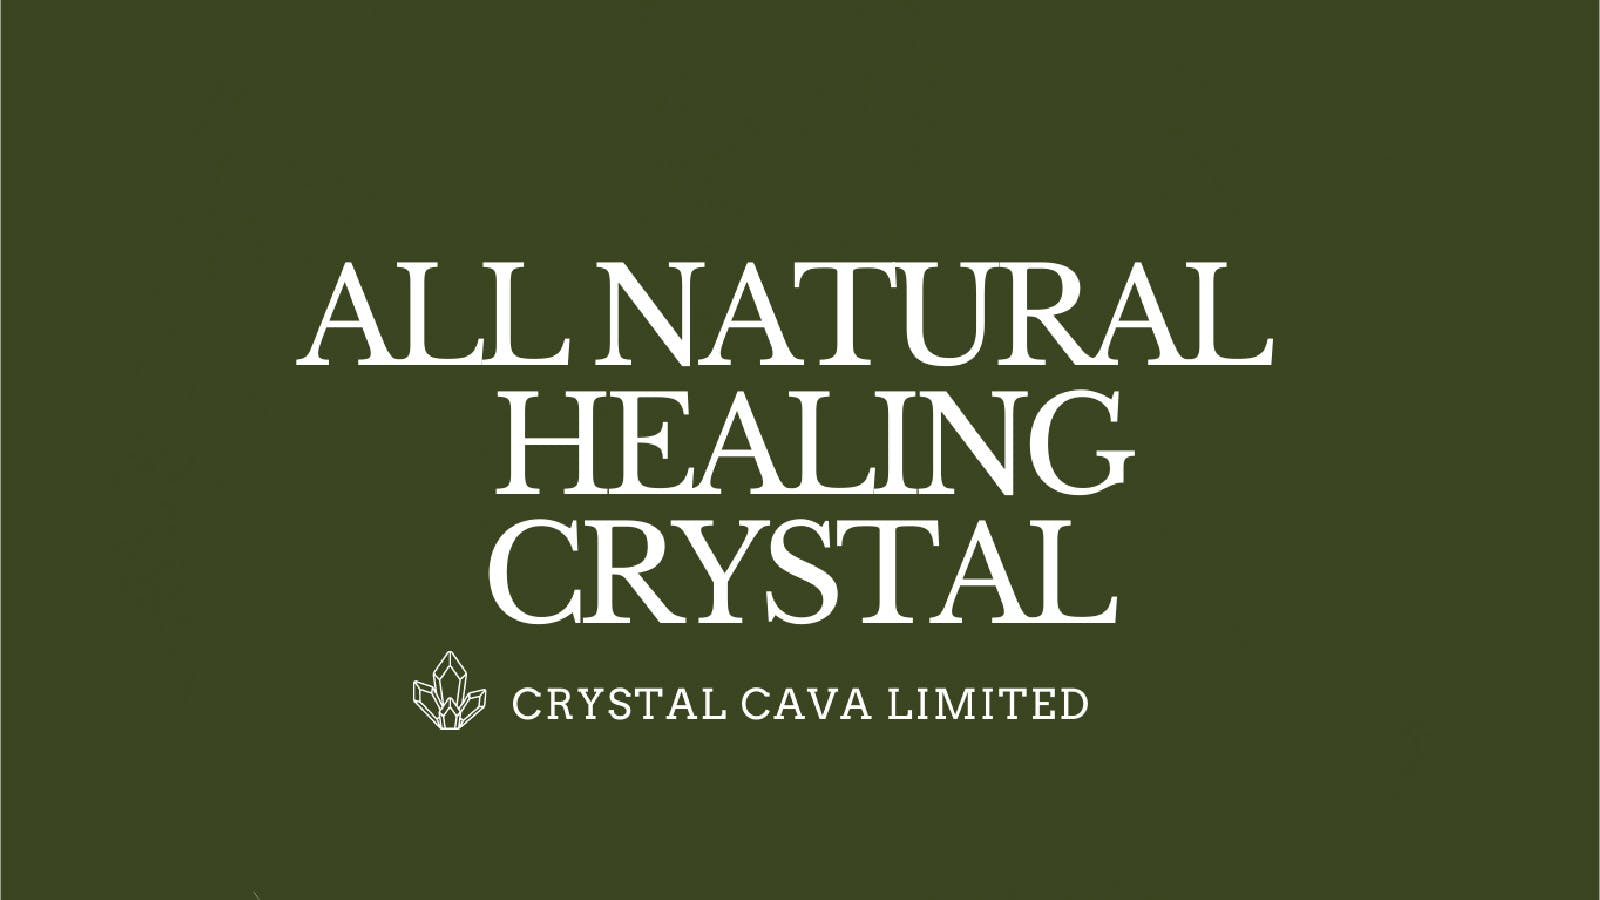 Crystal Cava